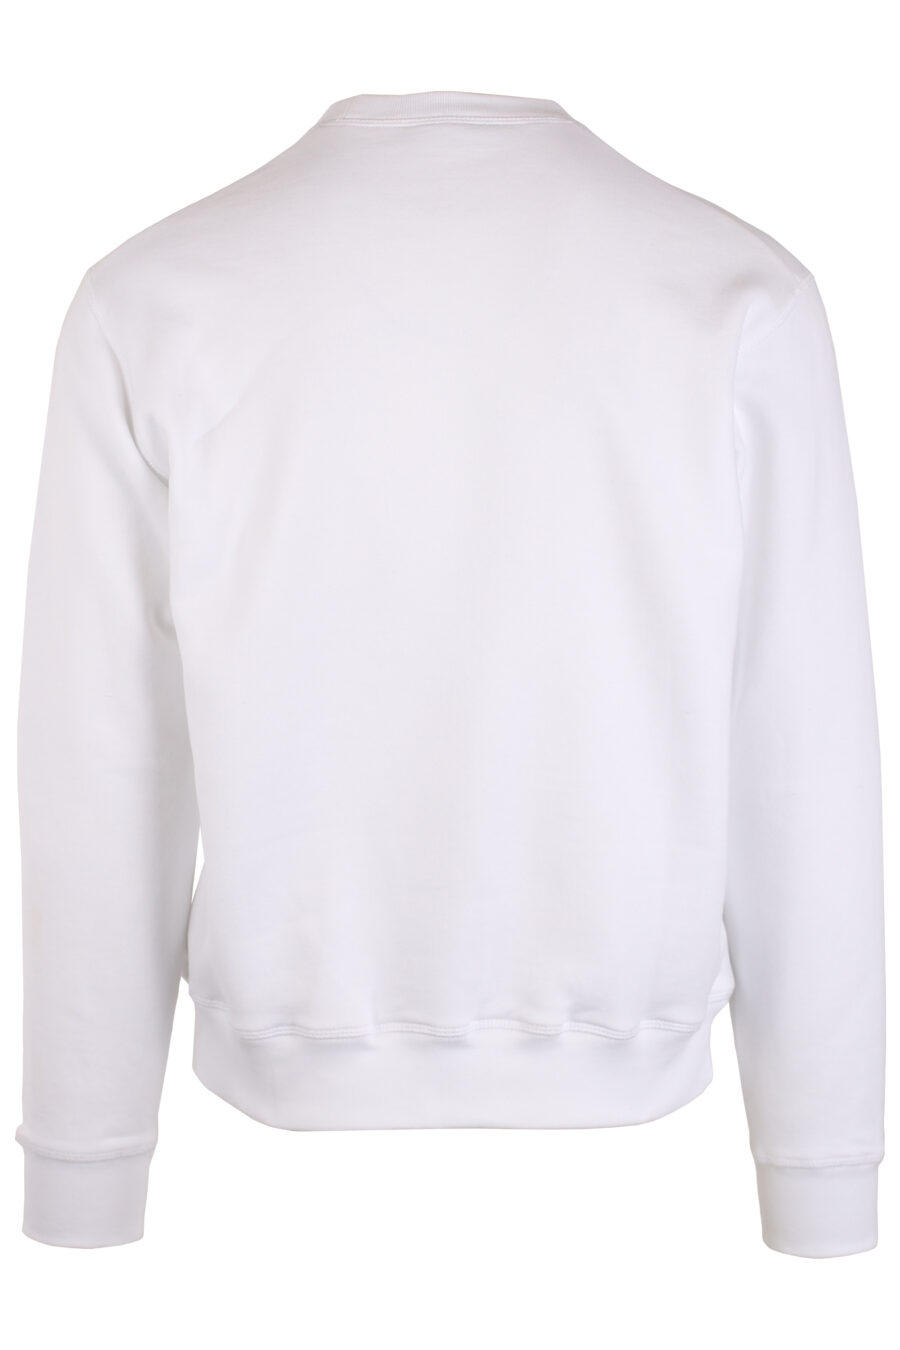 White sweatshirt "back on the planet" - IMG 4047